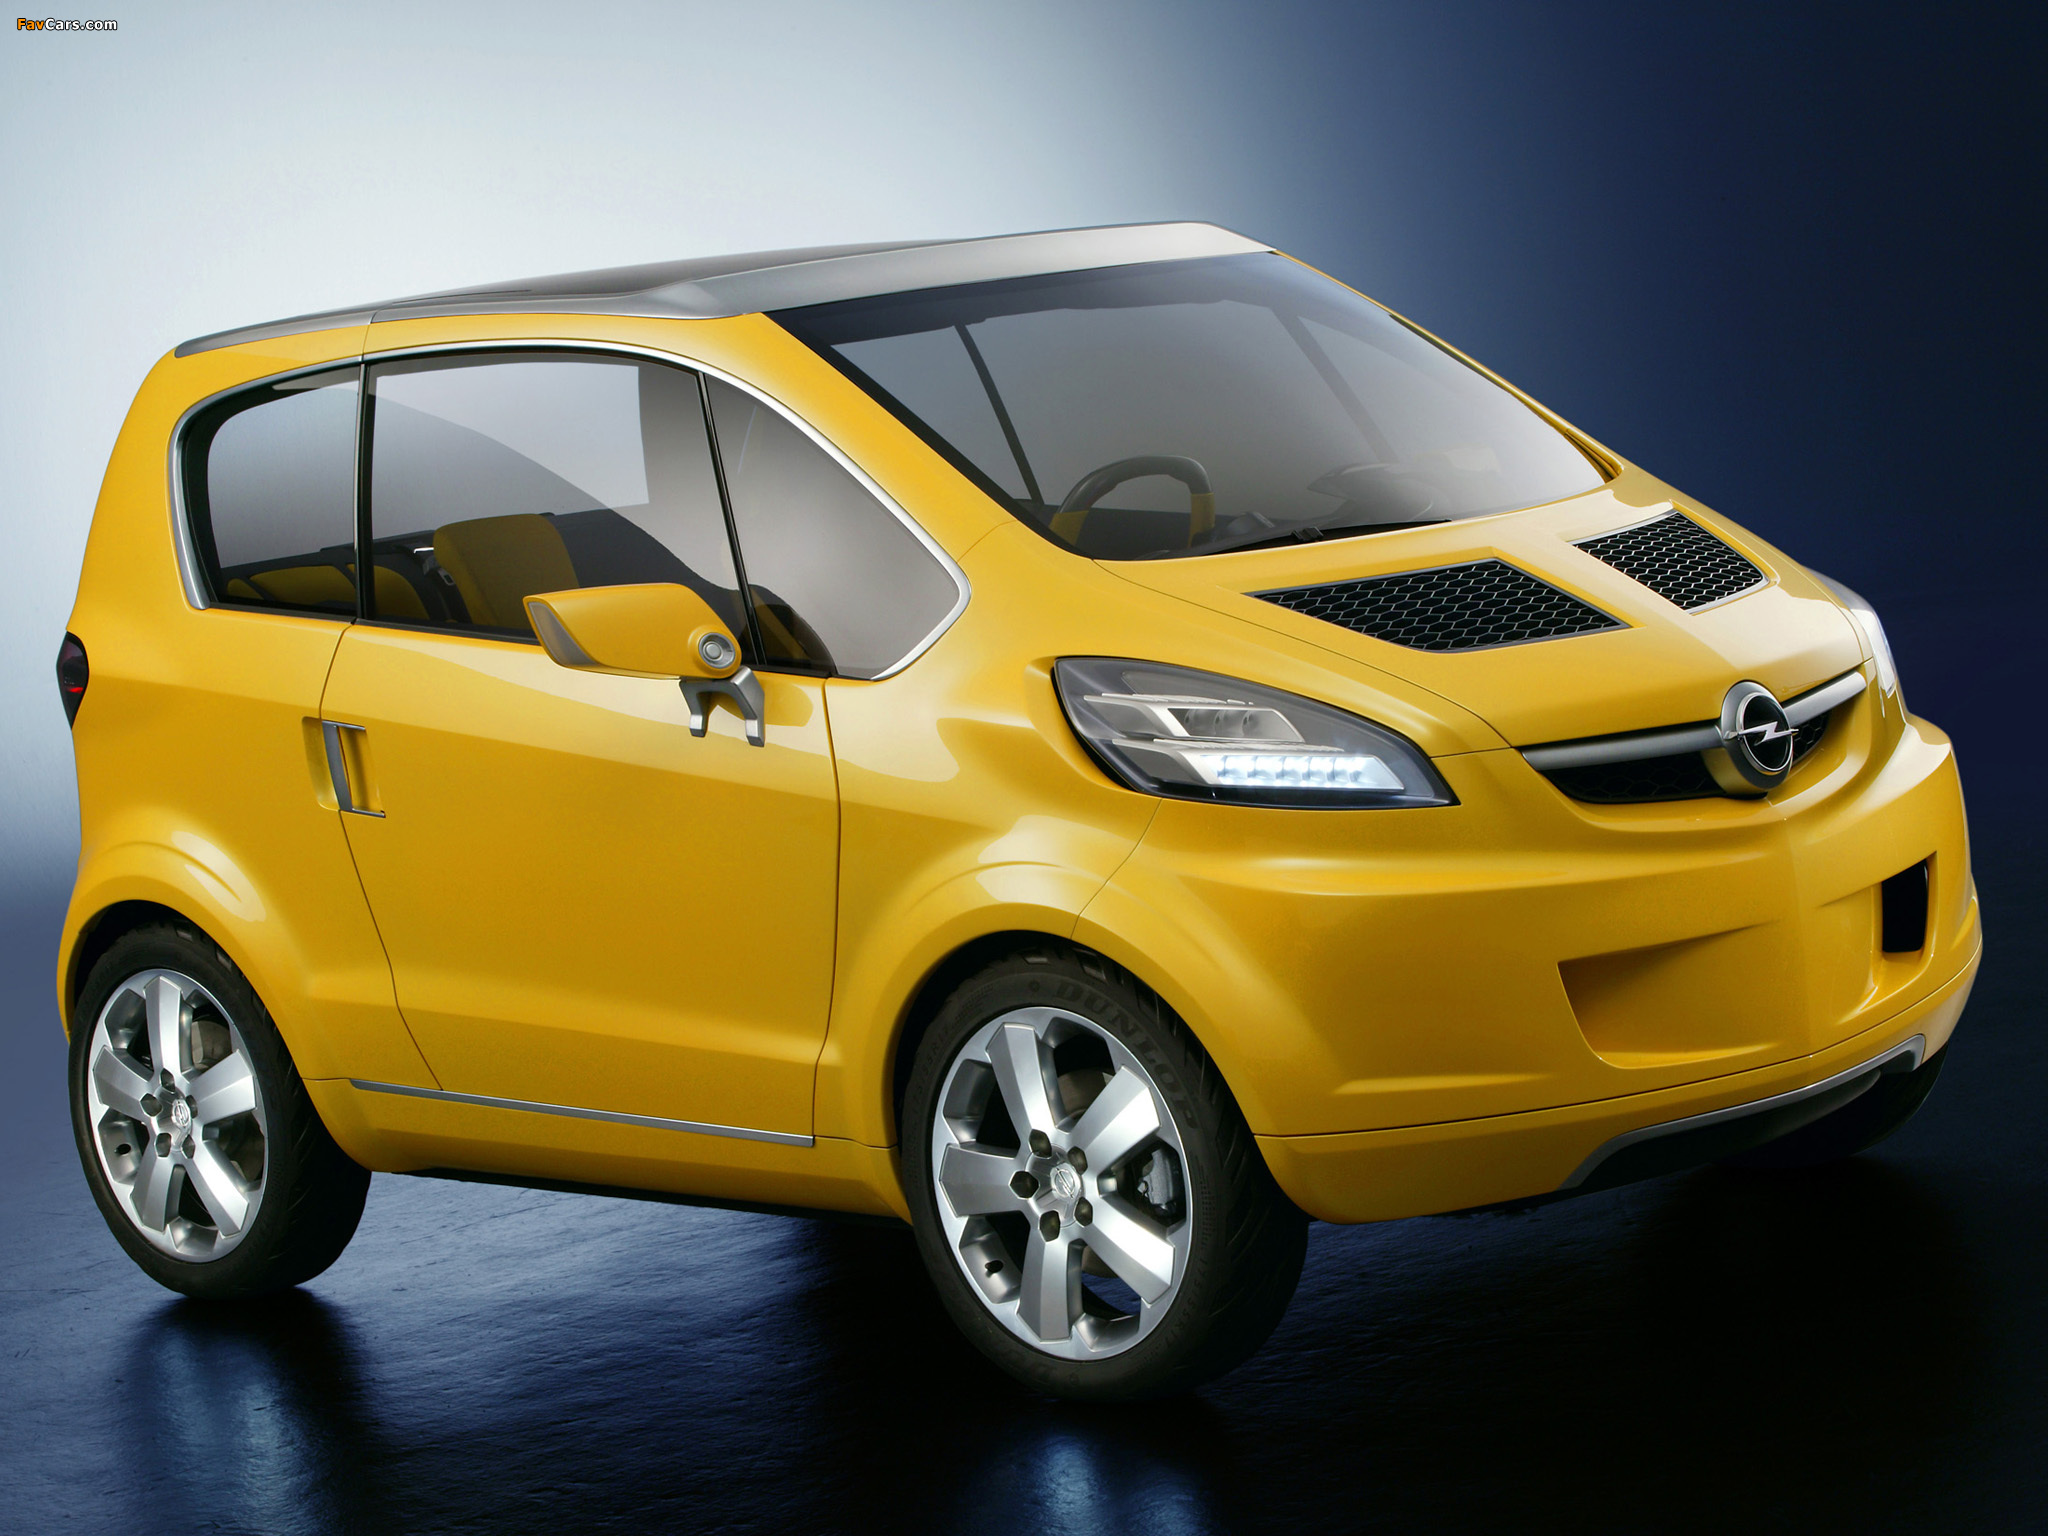 Продажа малолитражек. Opel Trixx. Byvin bd132j. Форд малолитражка. Opel Mini.